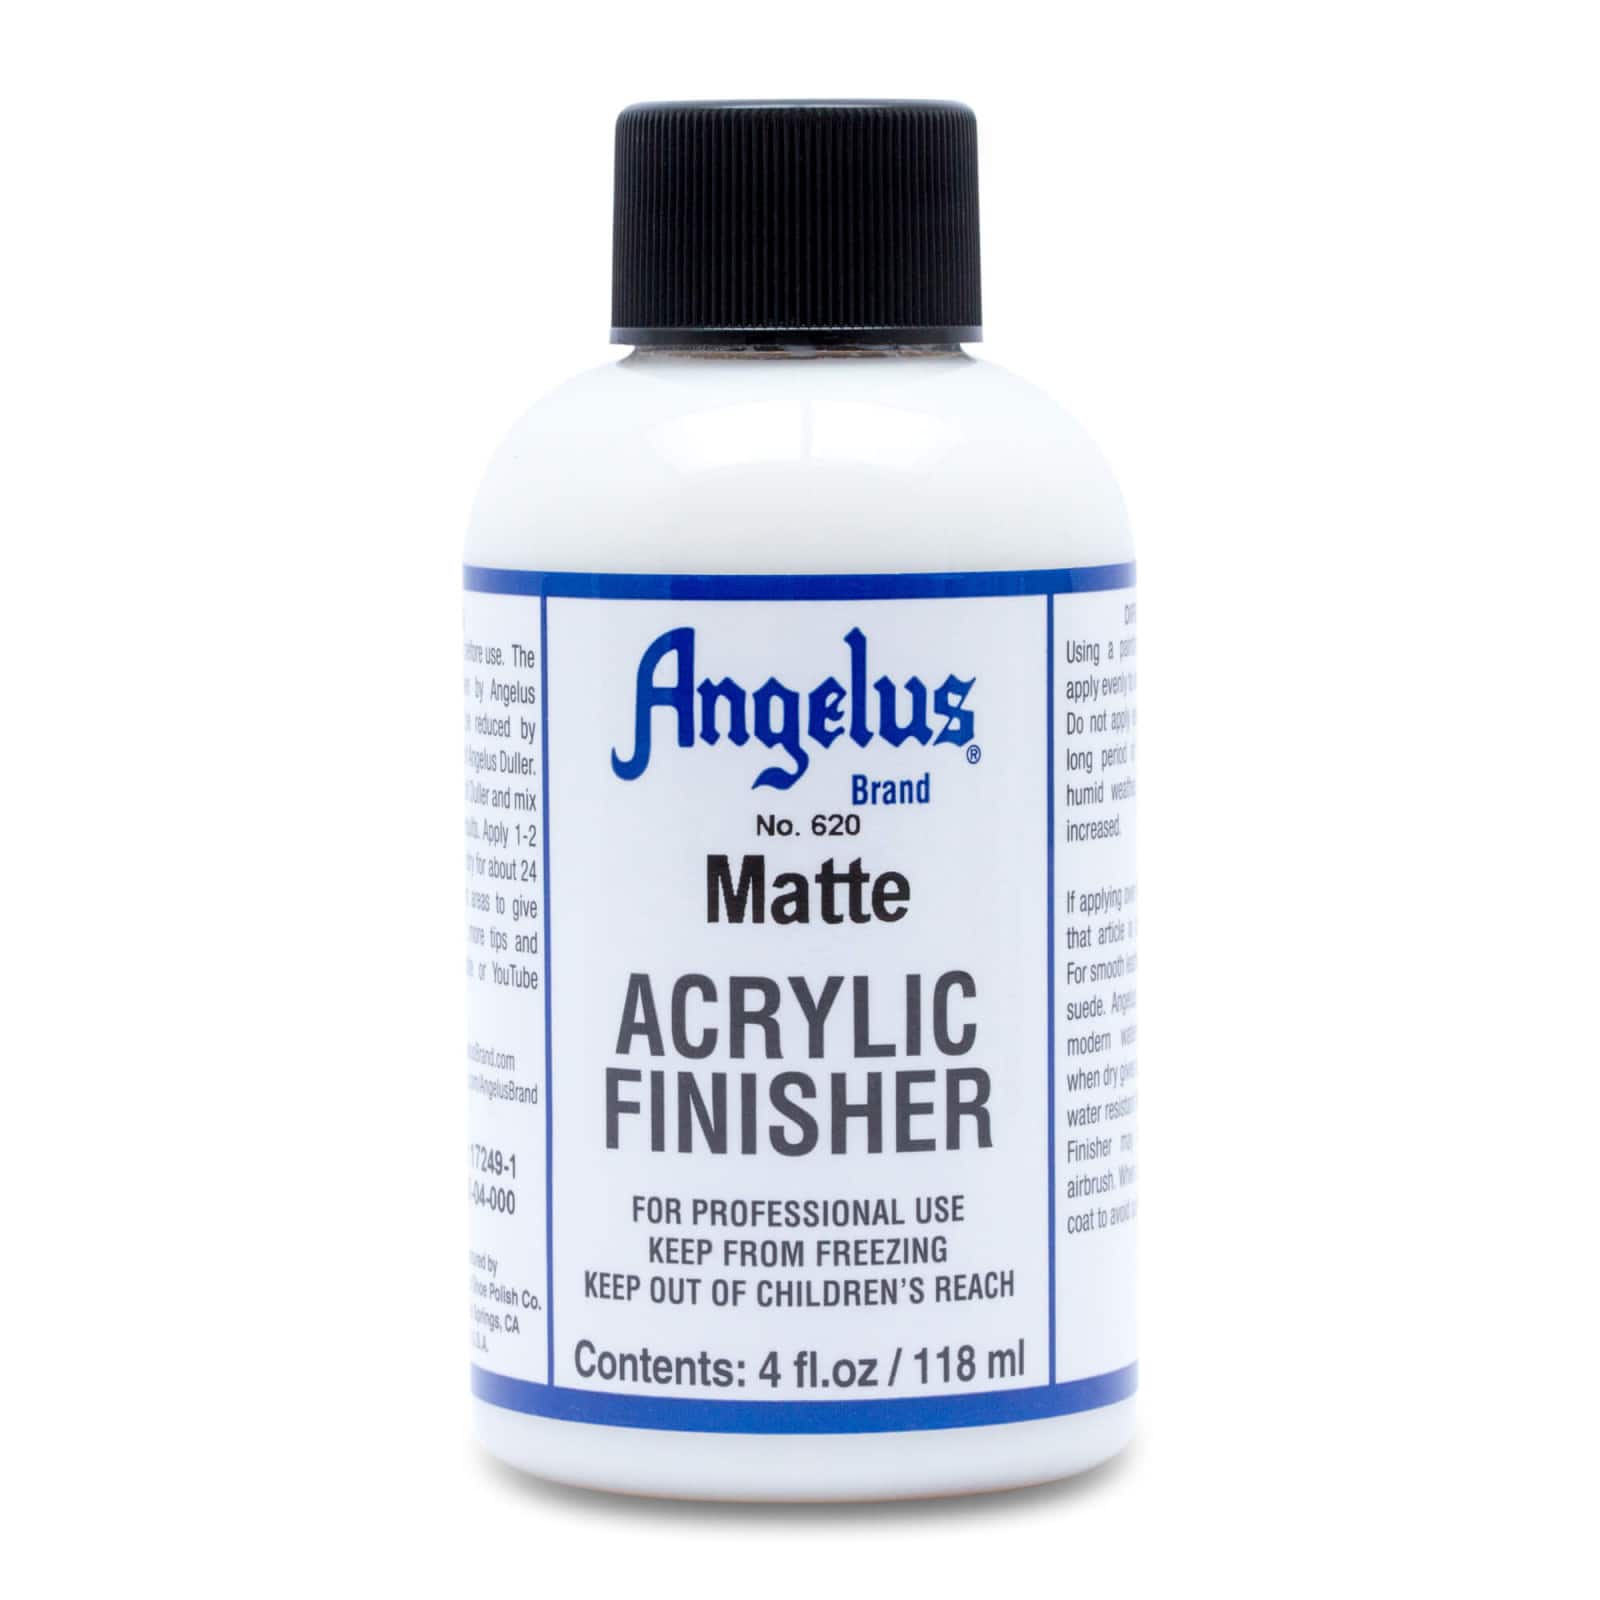 Angelus® Acrylic Leather Paint, 1oz., Michaels